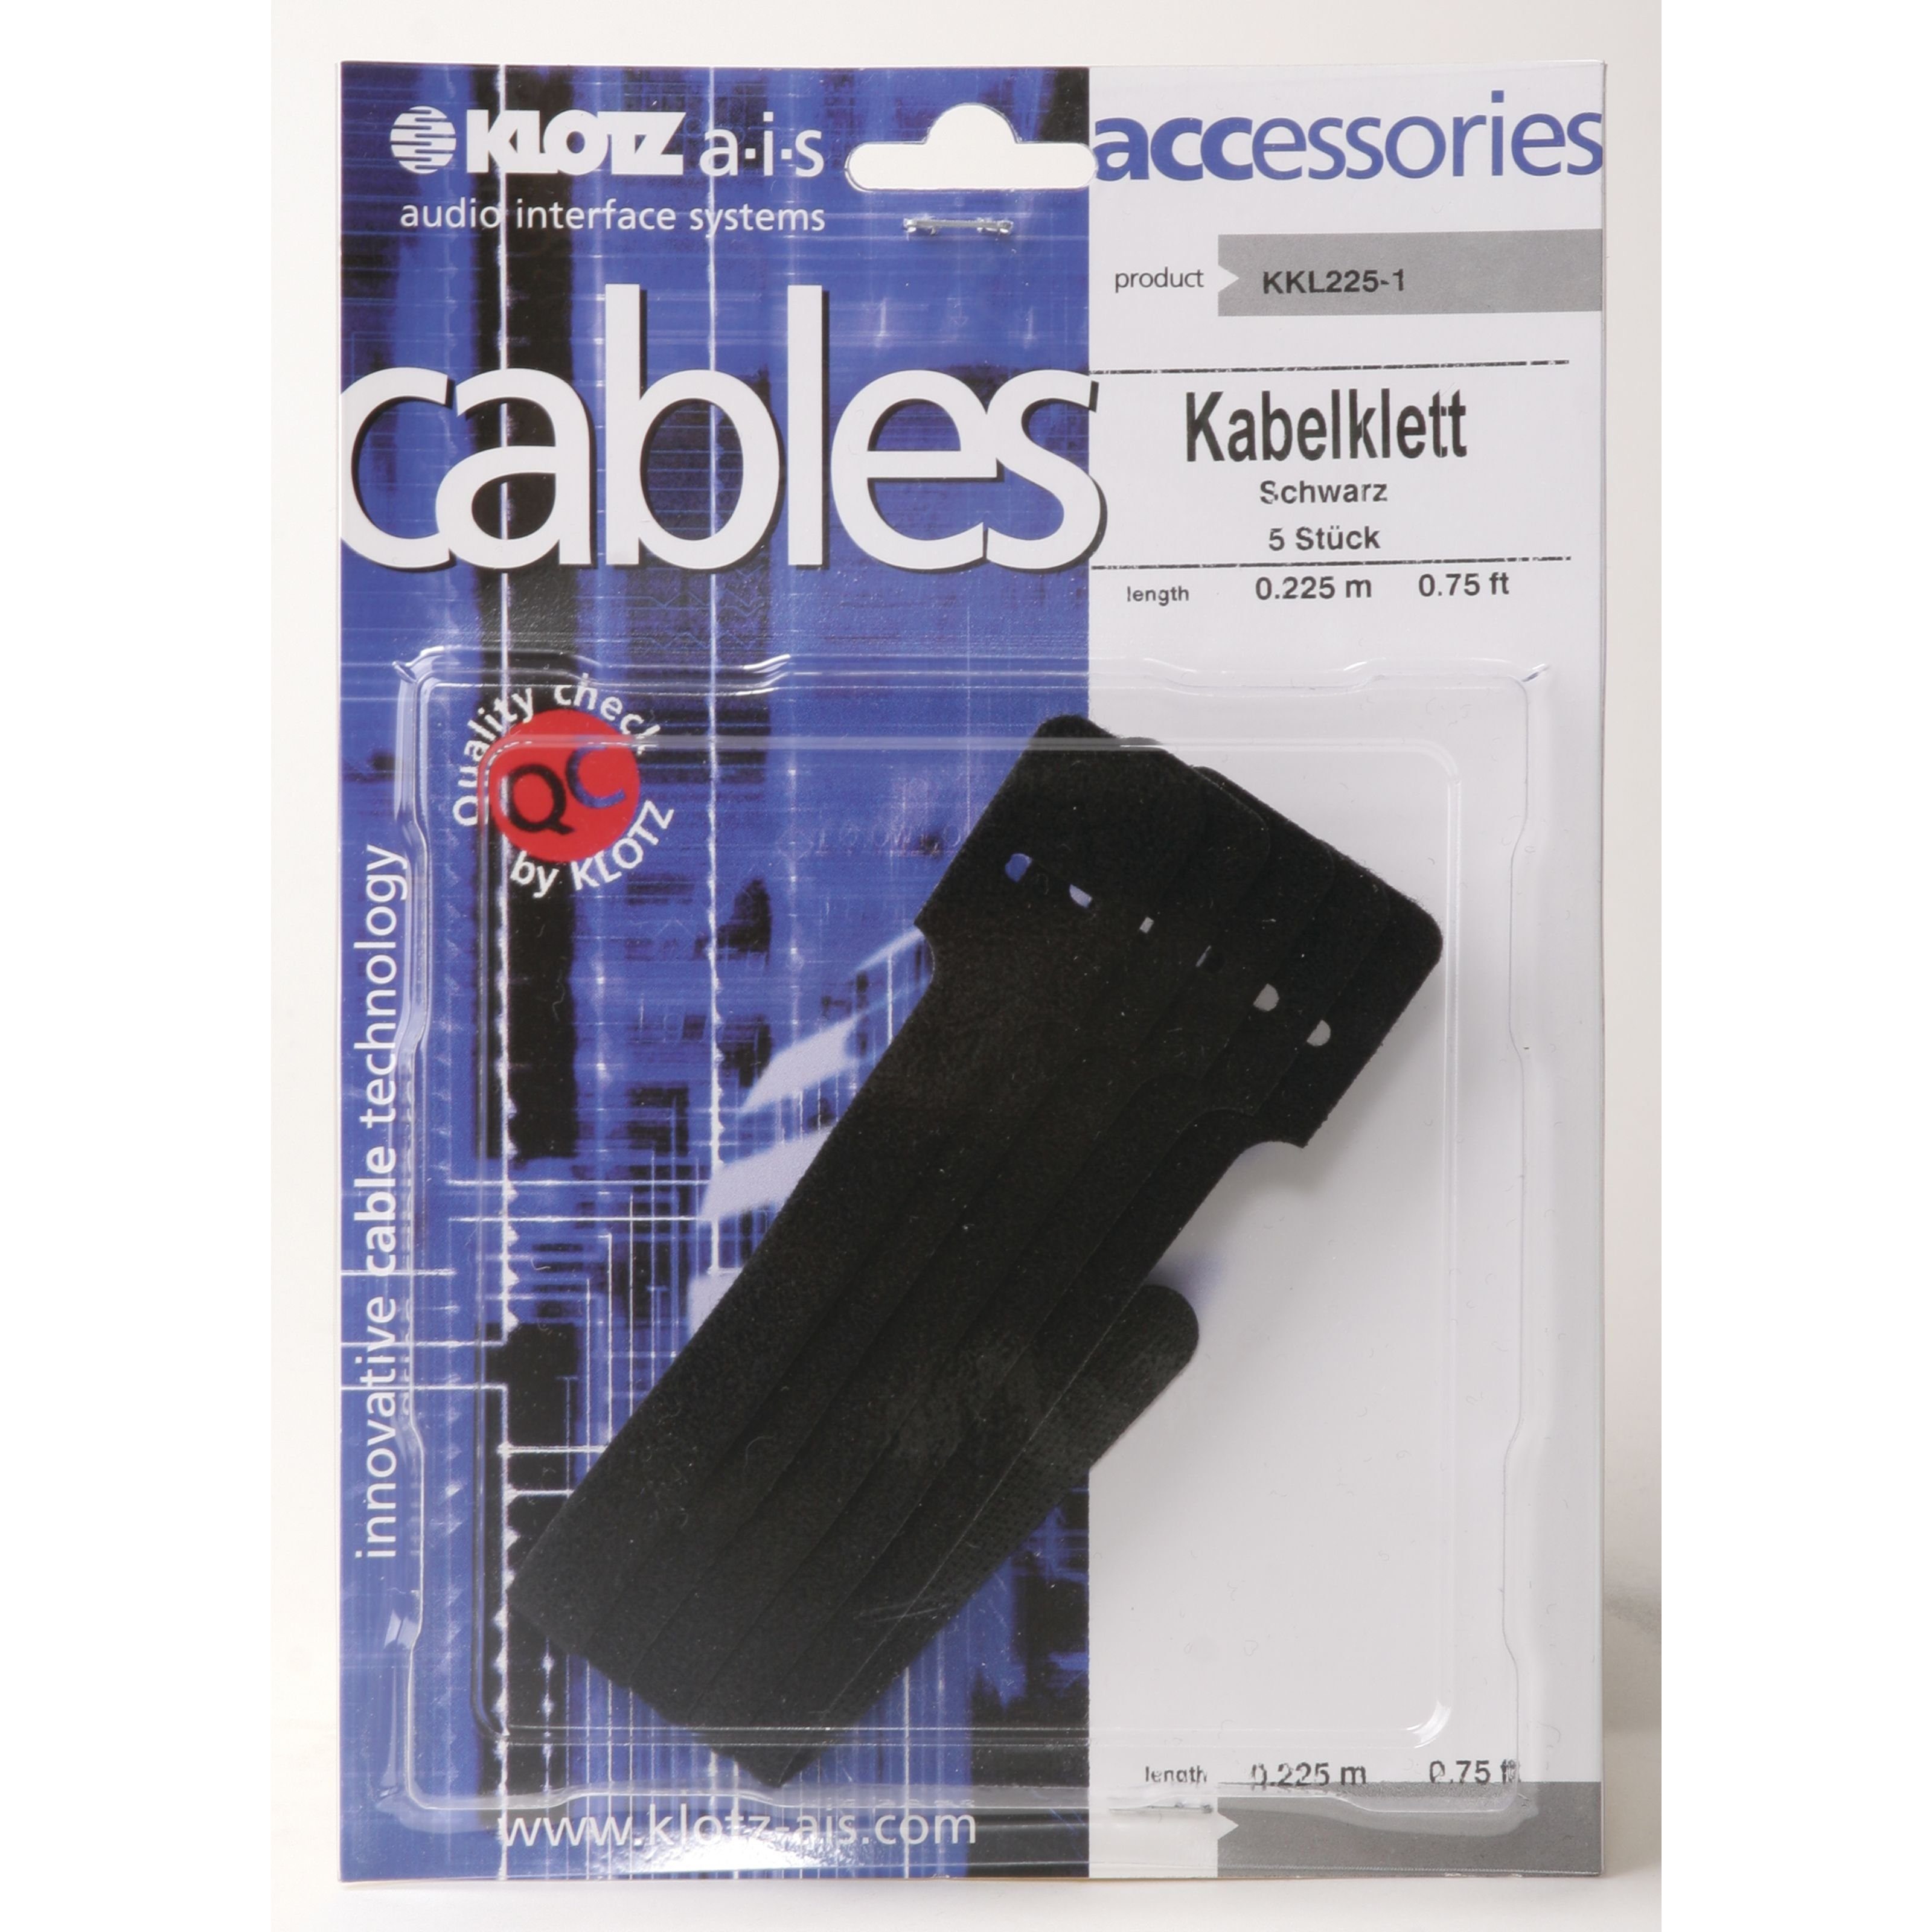 Klotz Cables Spielzeug-Musikinstrument, KKL225-1 Kabelklett Stofföse schwarz, 5 Stück - Kabelklette